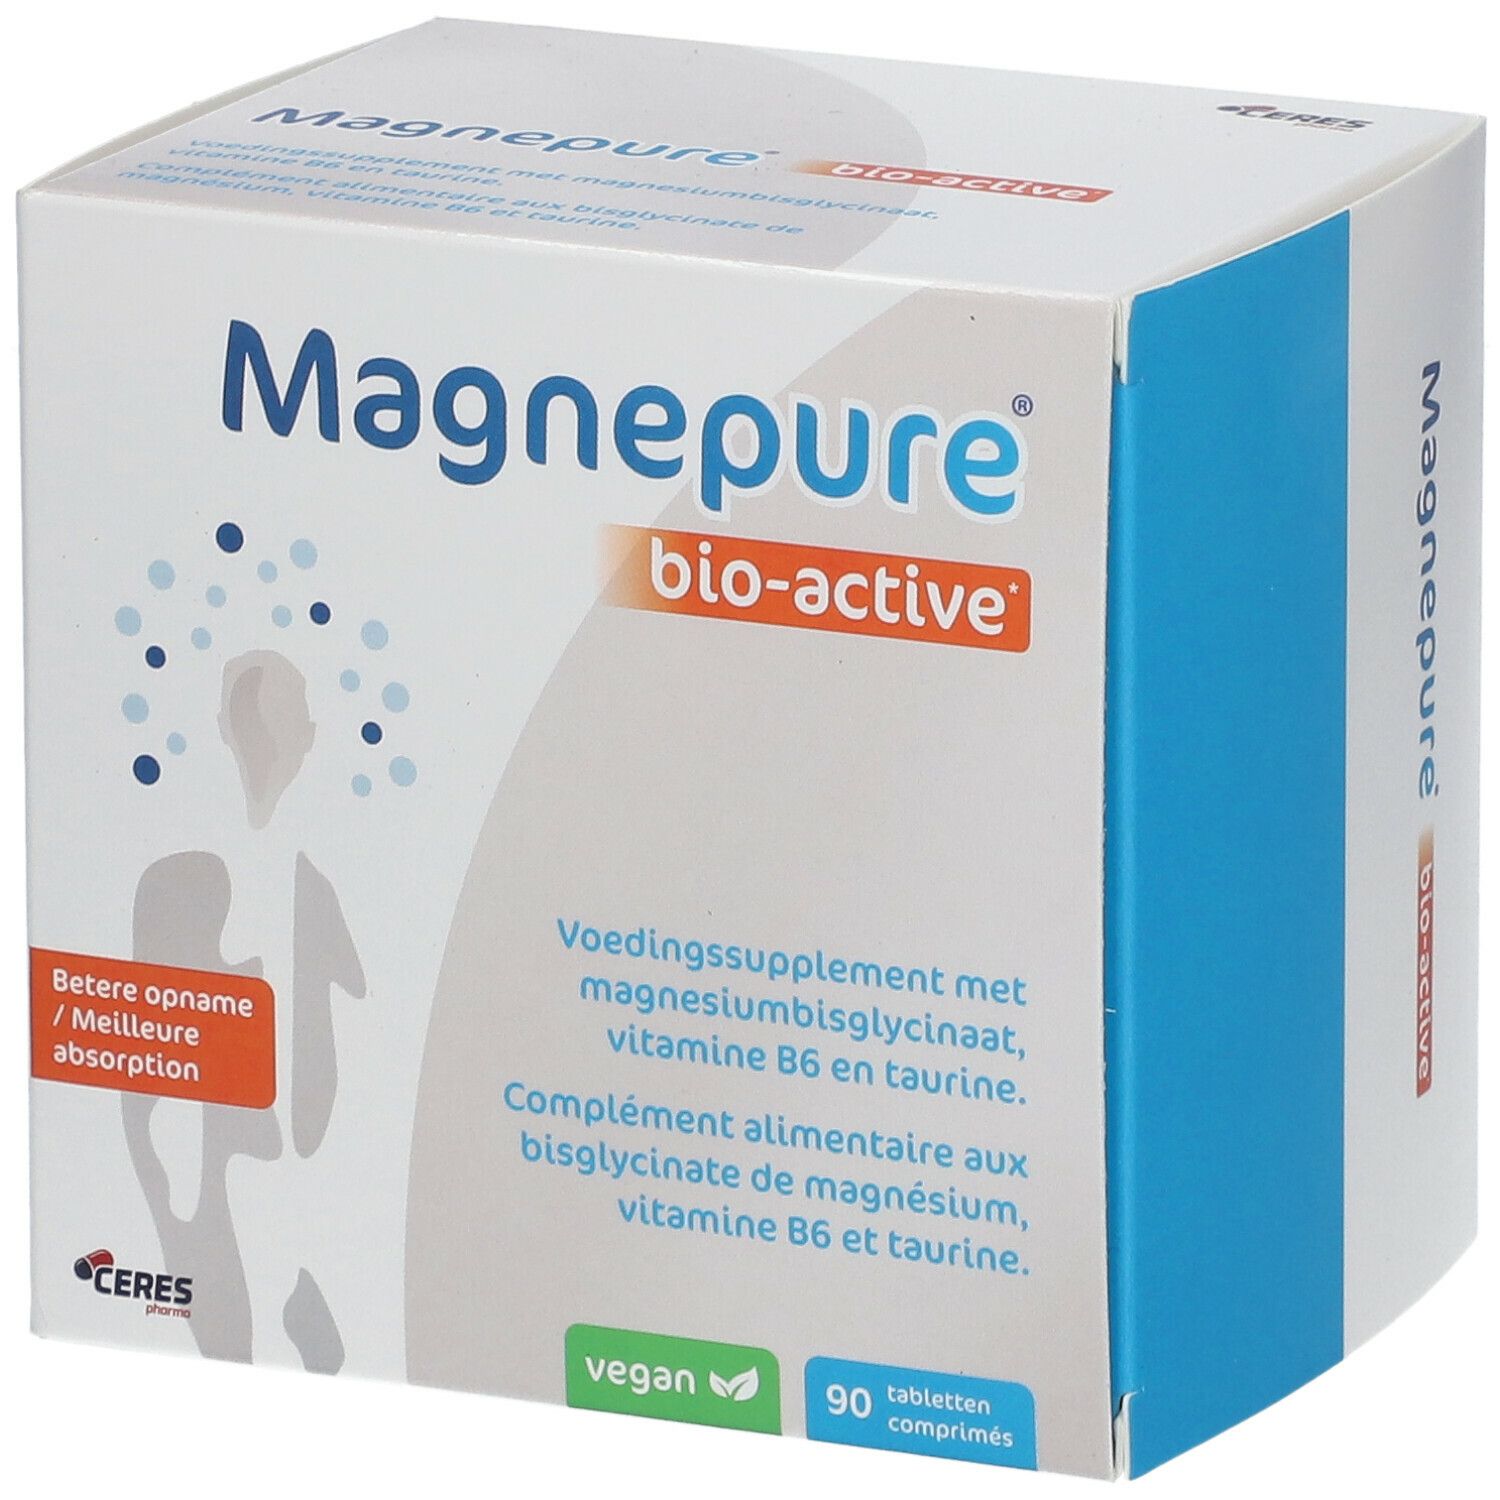 Magnepure™ bio-active